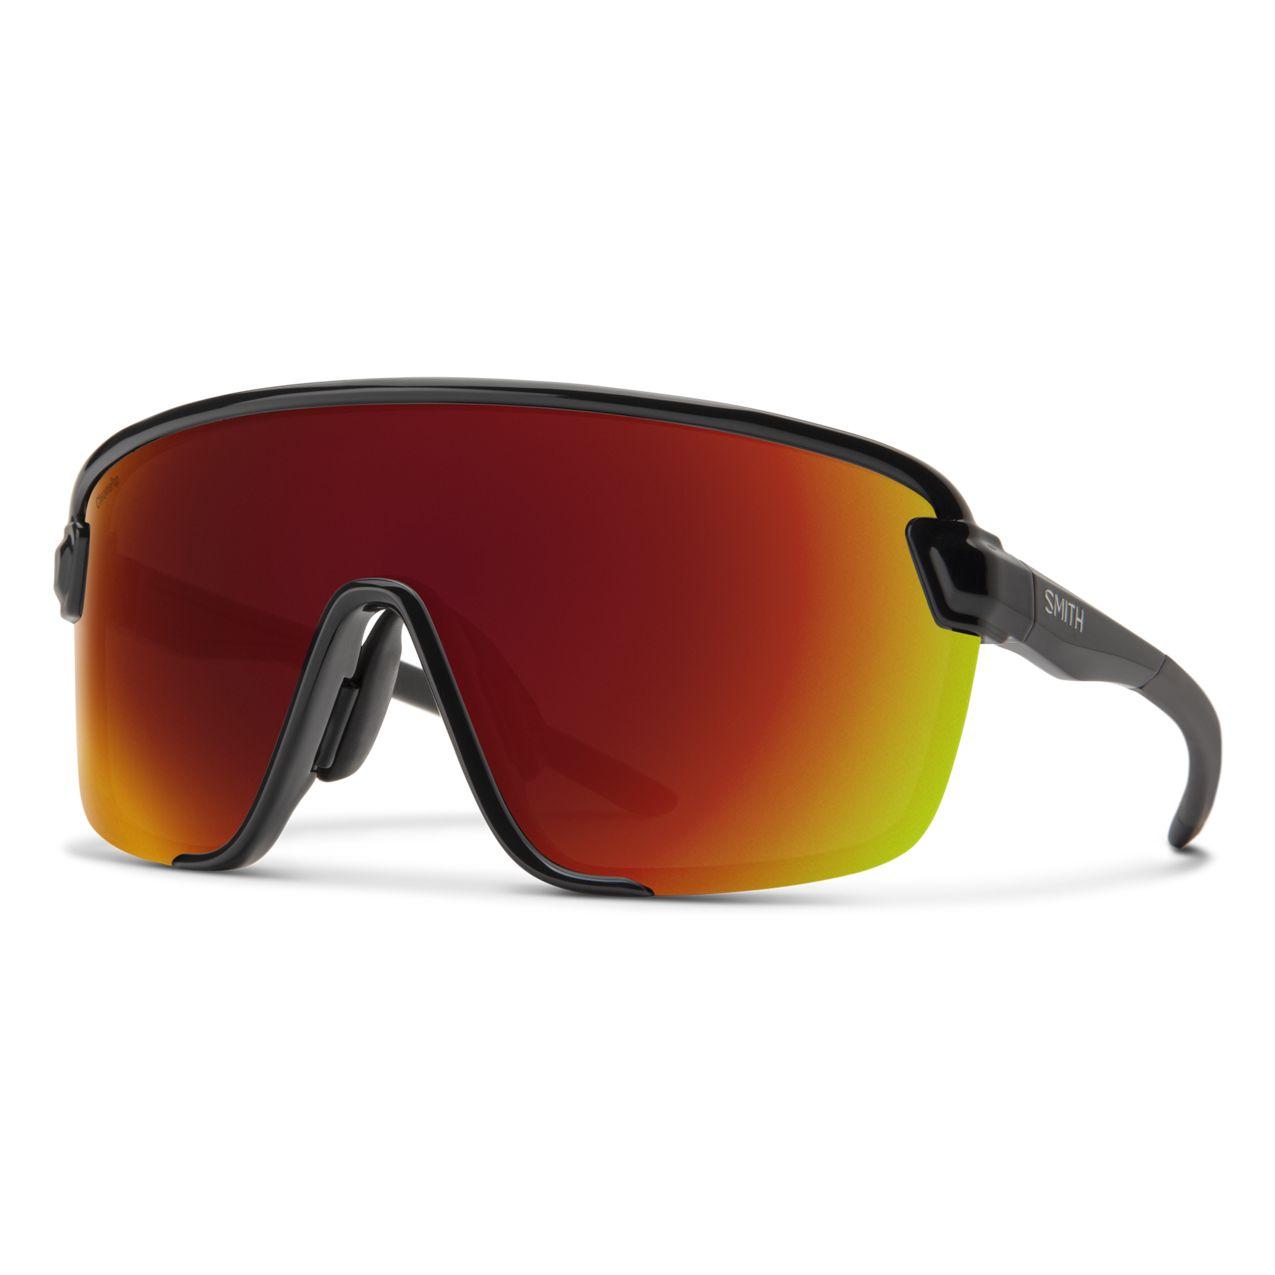 Smith Optics Sport & Performance 204927 Bobcat Sunglasses